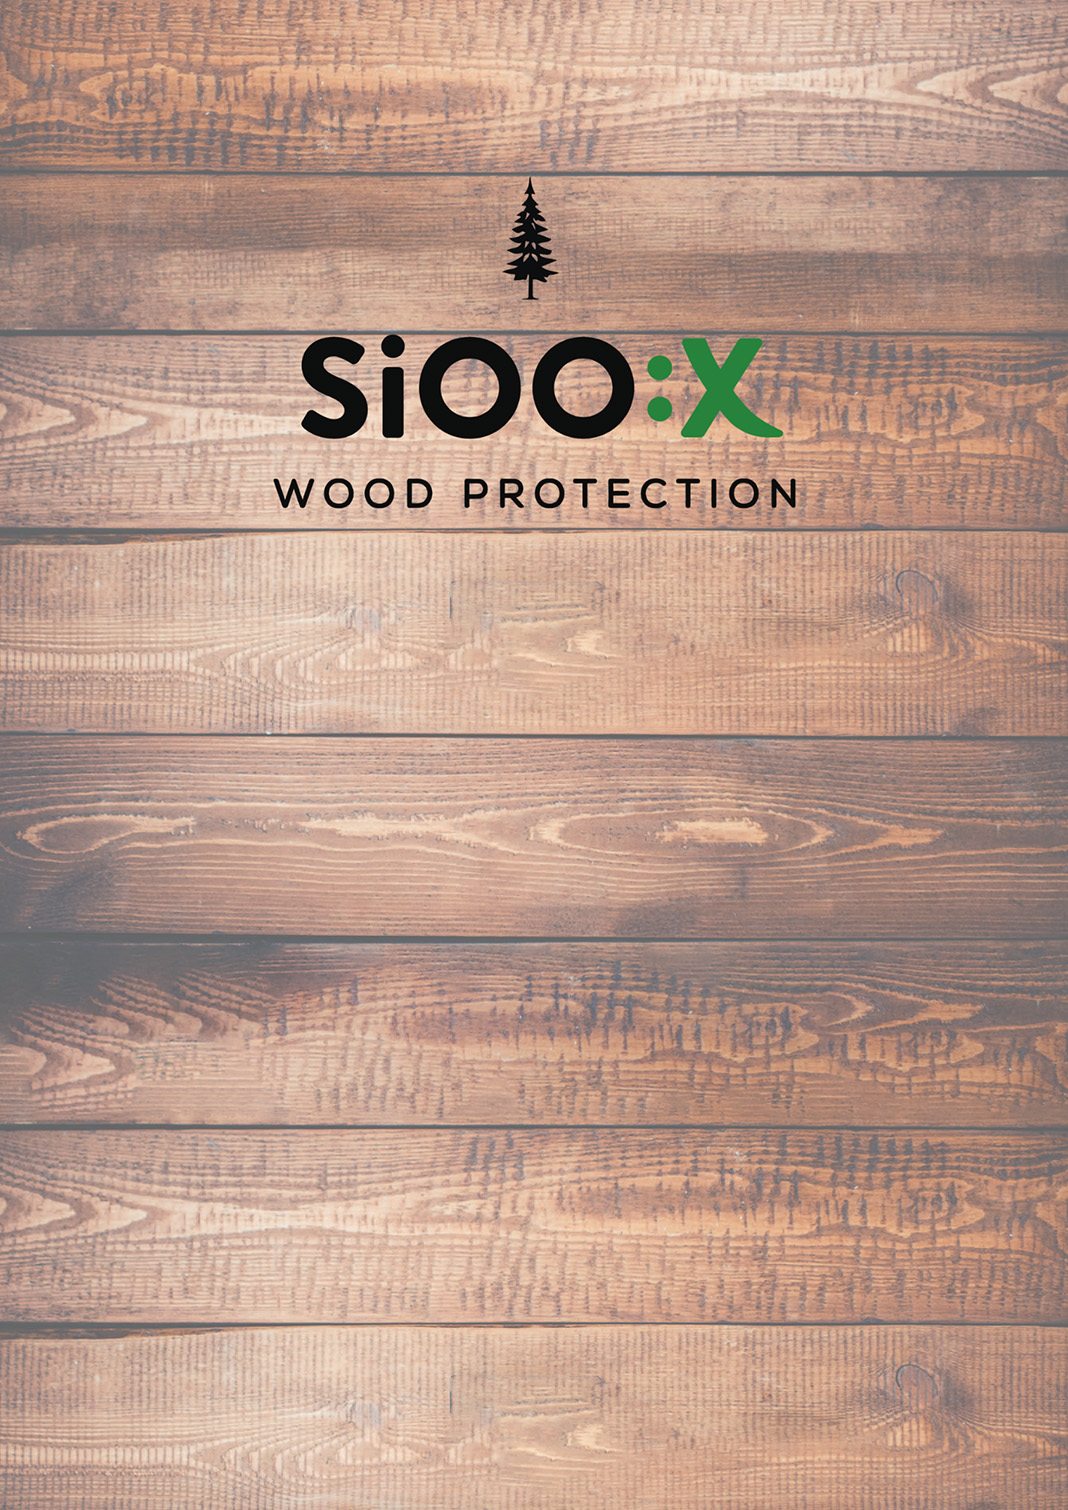 Sioo:x wood protection|